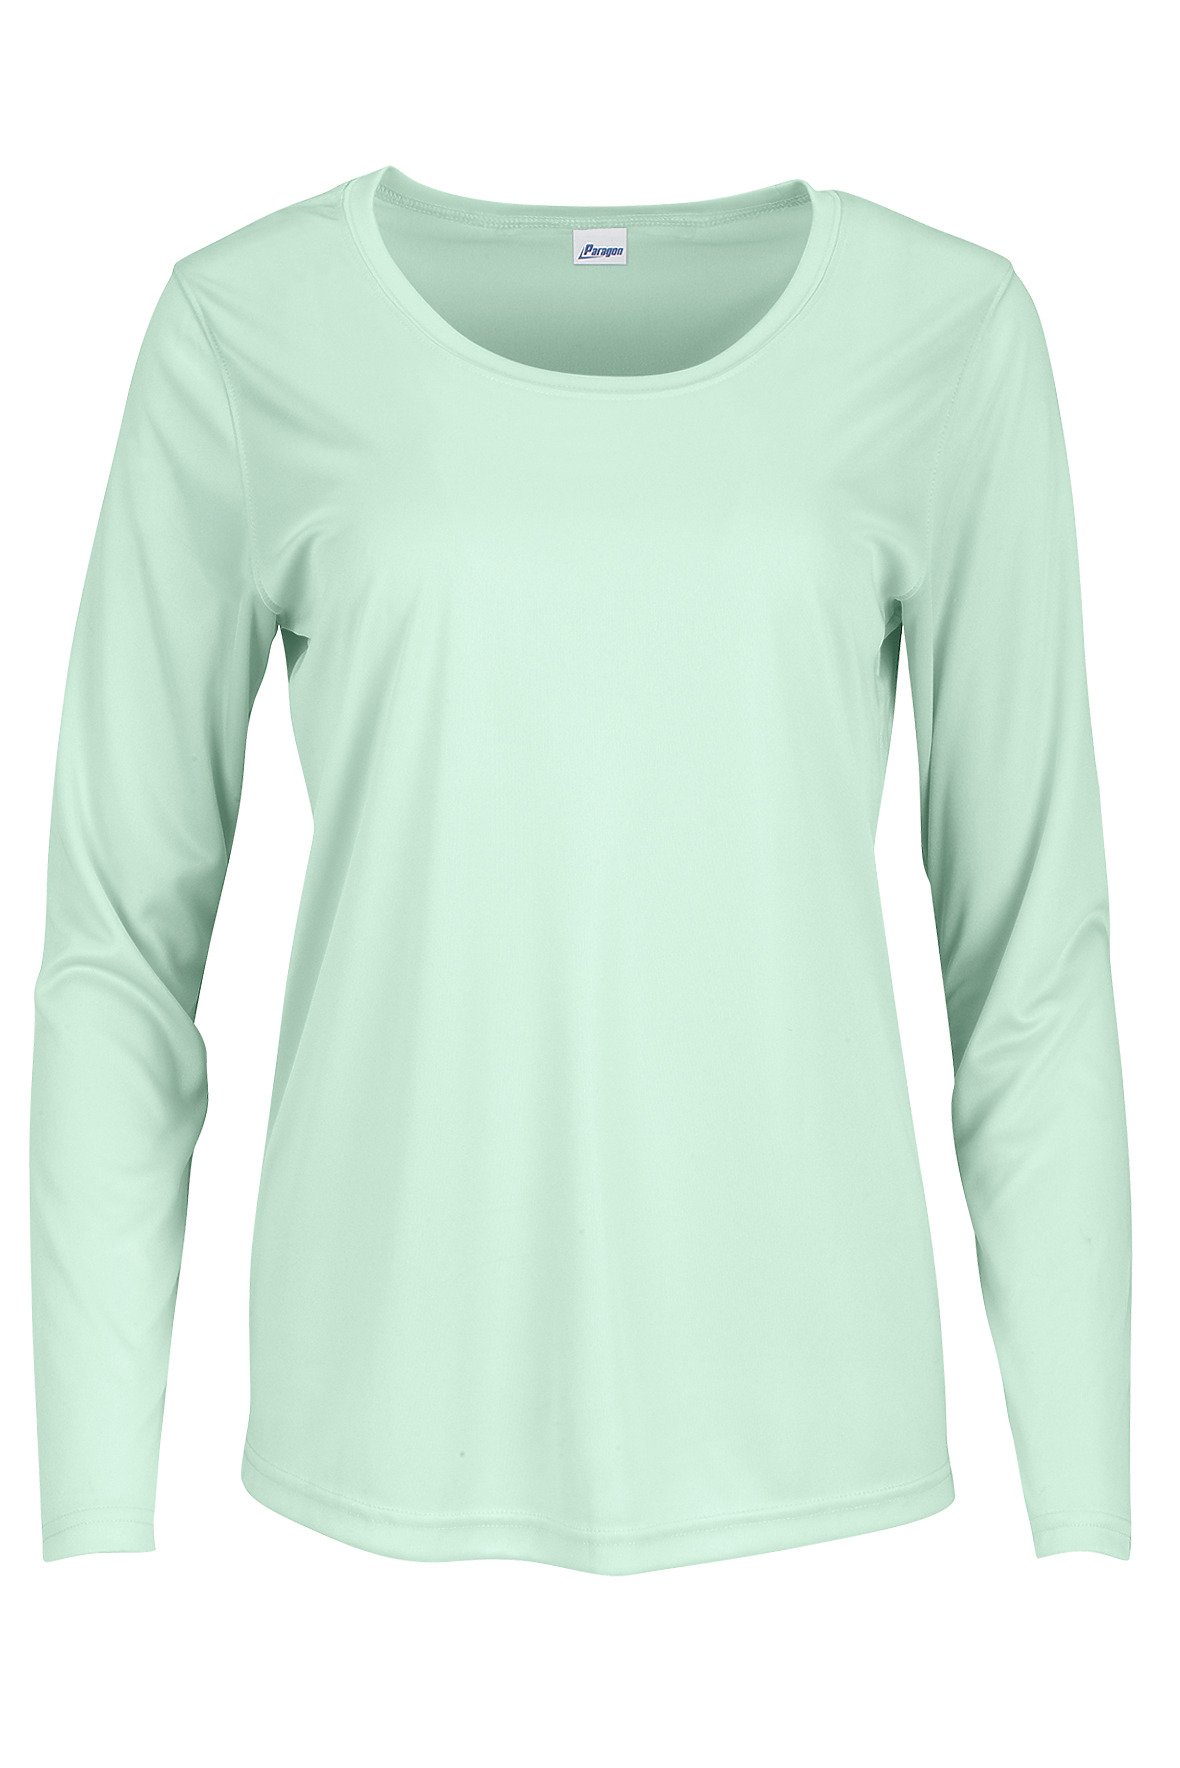 Paragon 214 - Ladies Long Islander Long Sleeve Tee $9.52 - T-Shirts